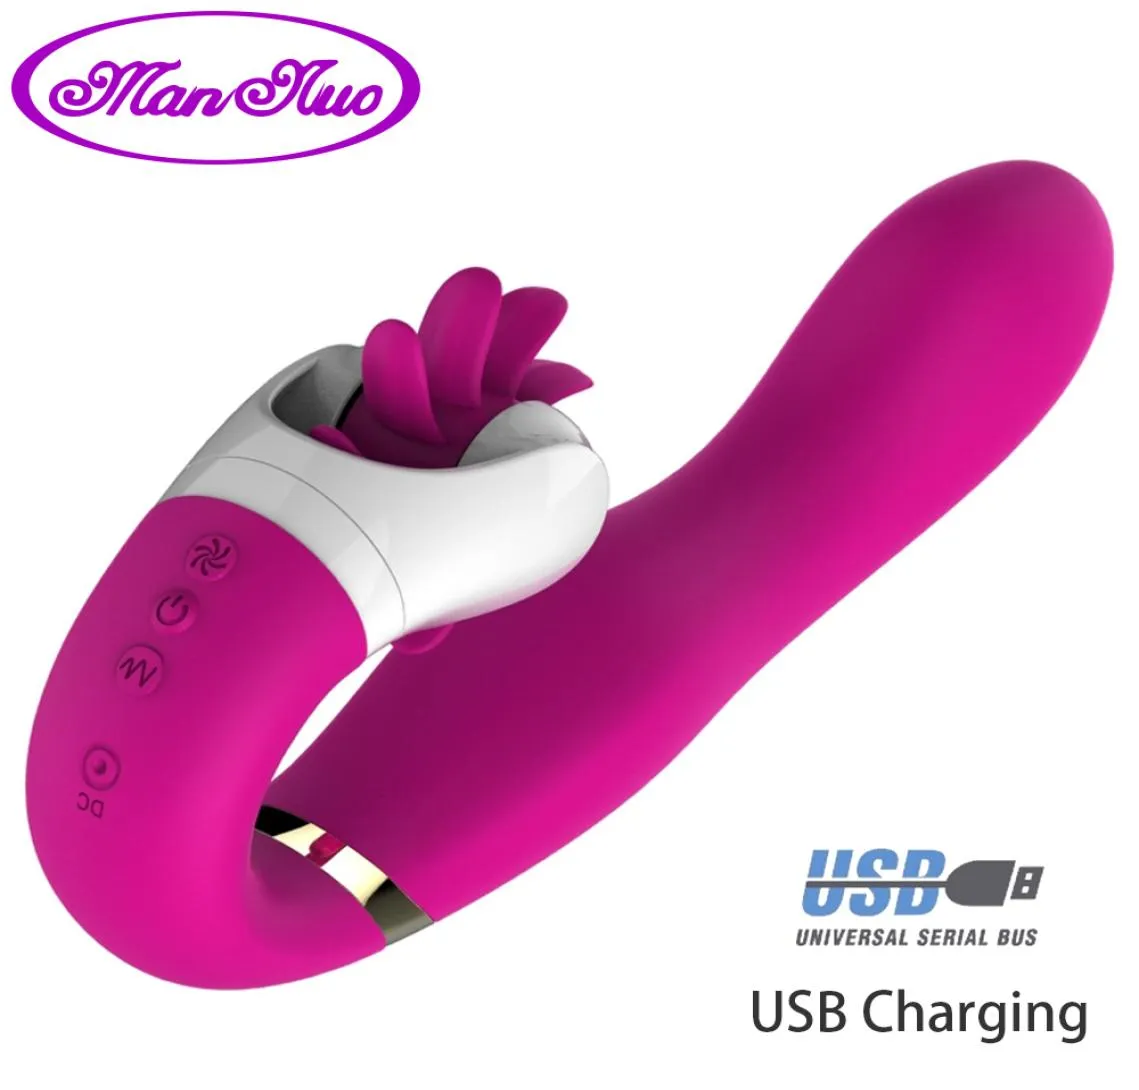 Man nuo 12 Speed Rotatie Orale Seks Tong Likken Speelgoed G-spot Dildo Vibrators Vibrerende Clitoris Stimulator Speeltjes voor vrouwen D1819002547